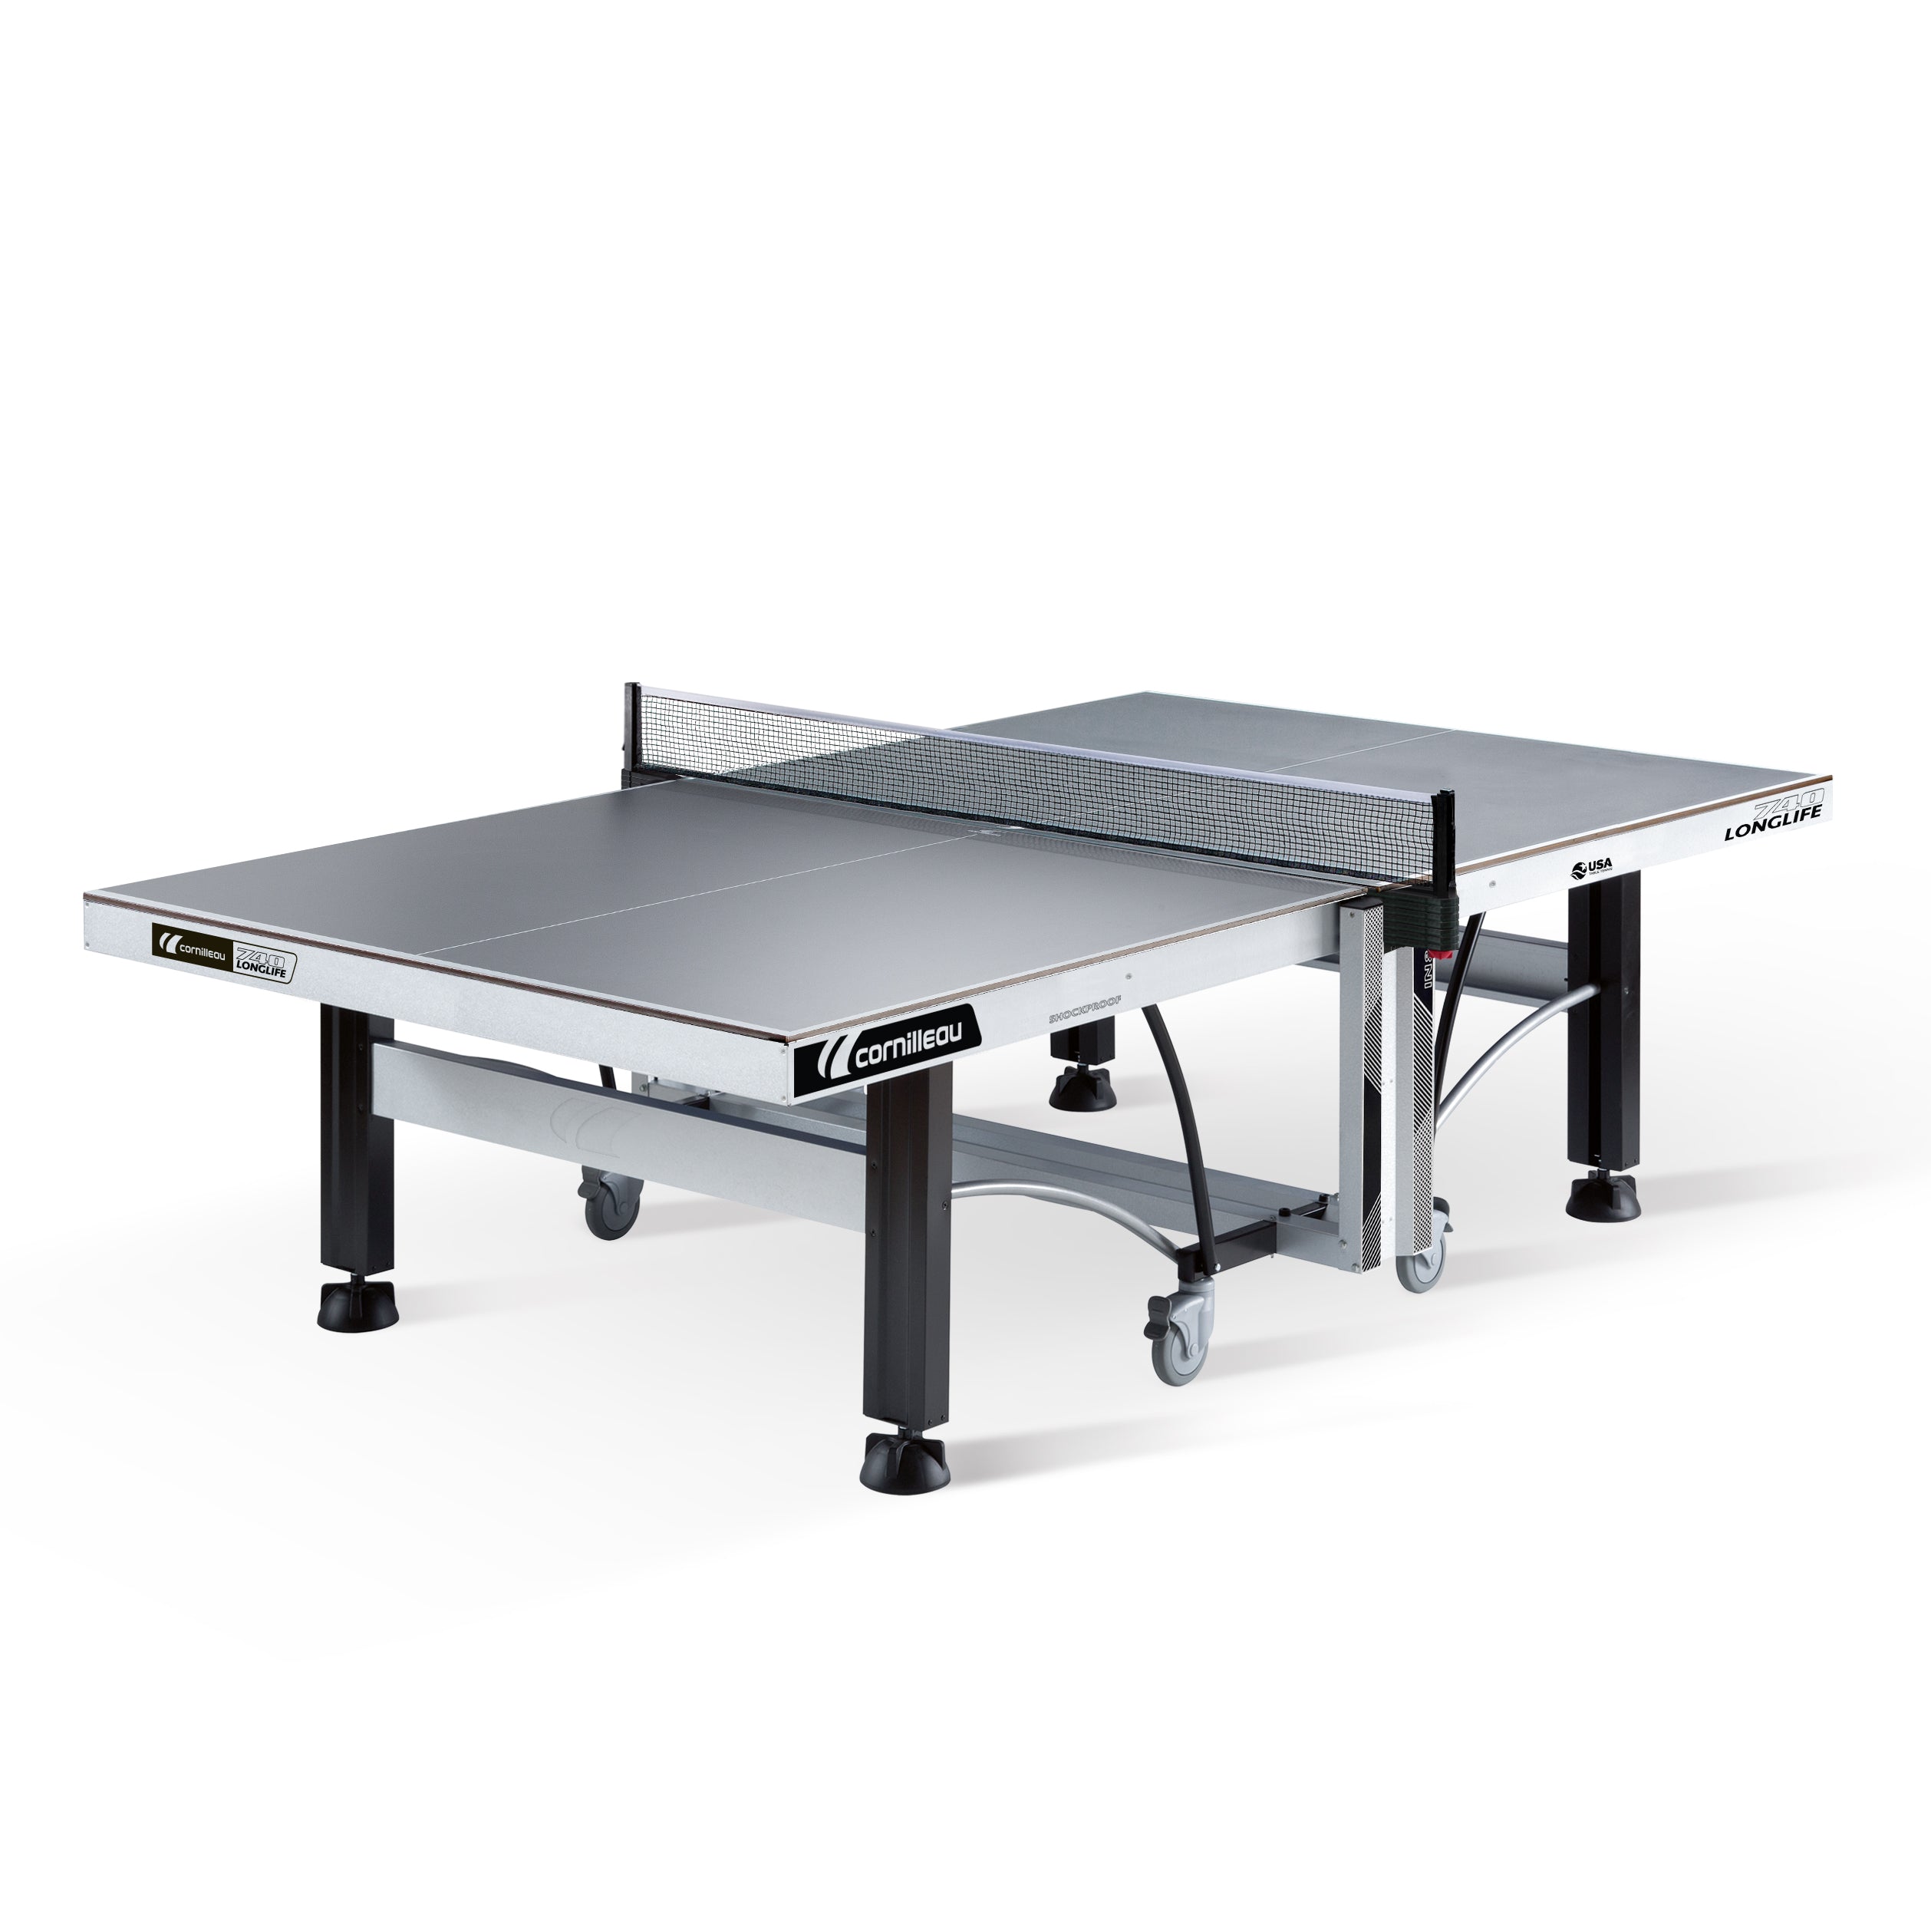 Cornilleau 740 LONGLIFE Table Tennis Table